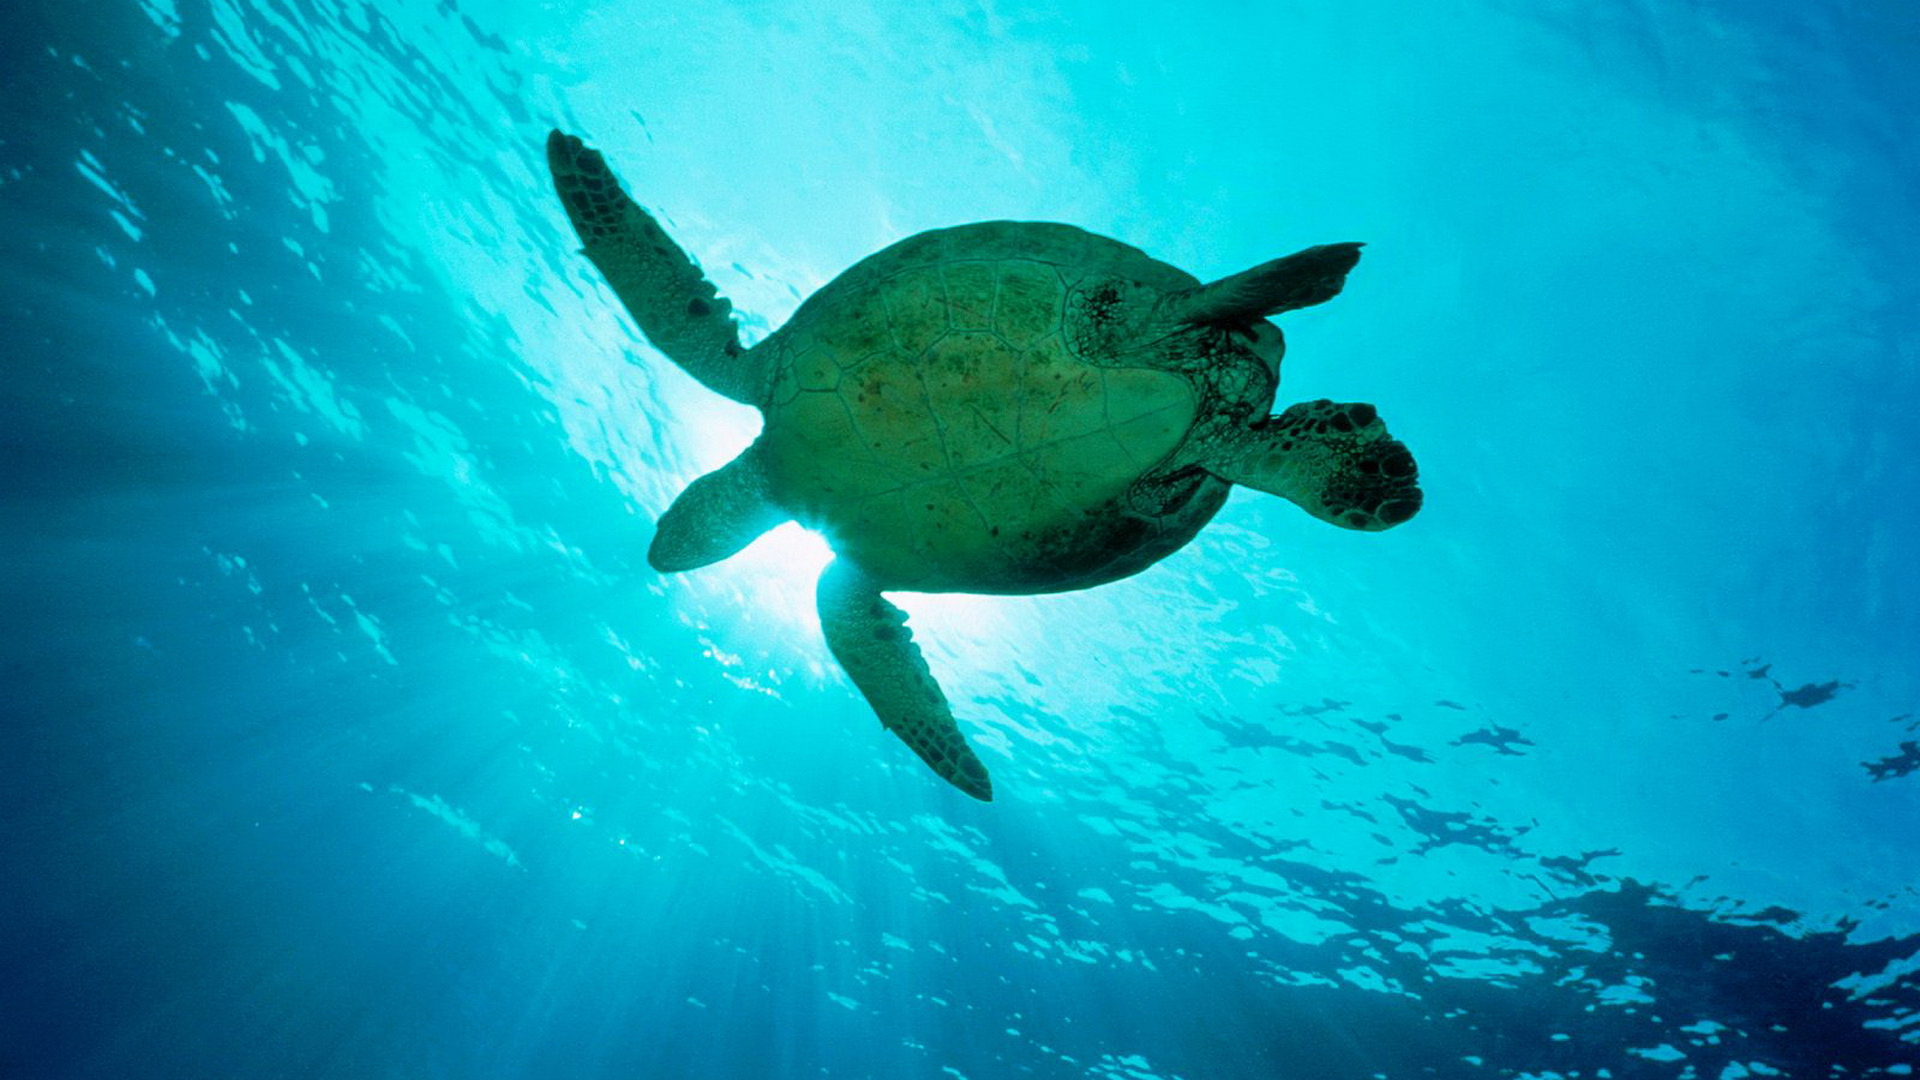 sea turtles - desktop wallpaper